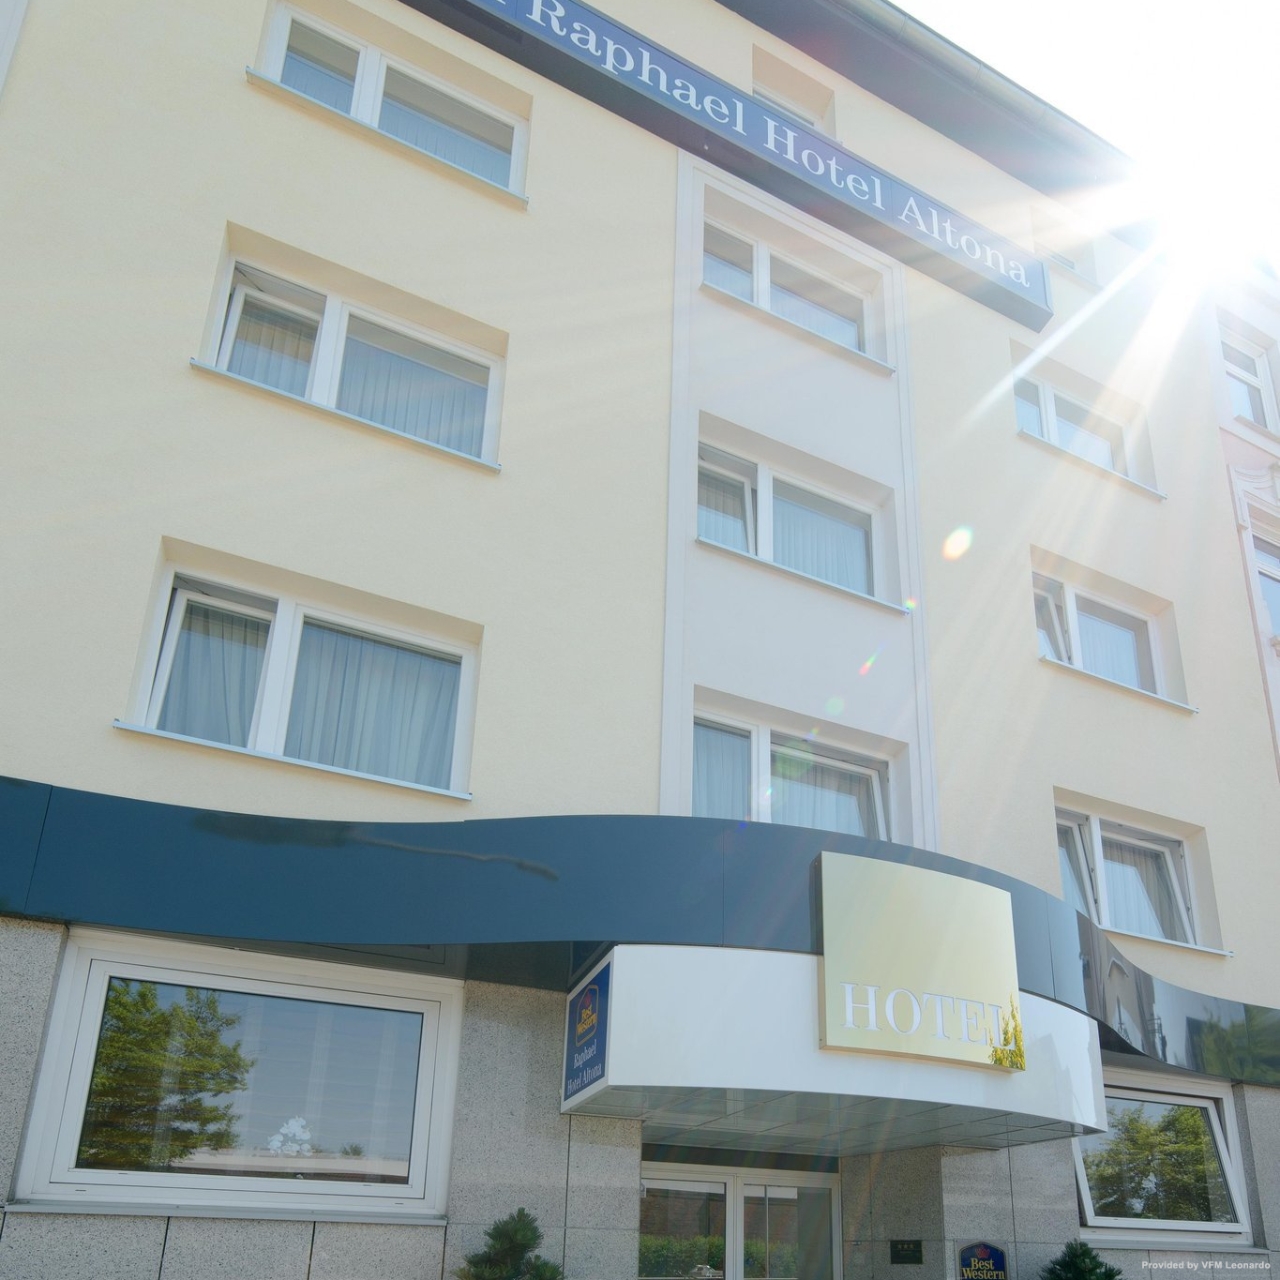 Best Western Raphael Hotel Altona Hamburg bei HRS günstig buchen